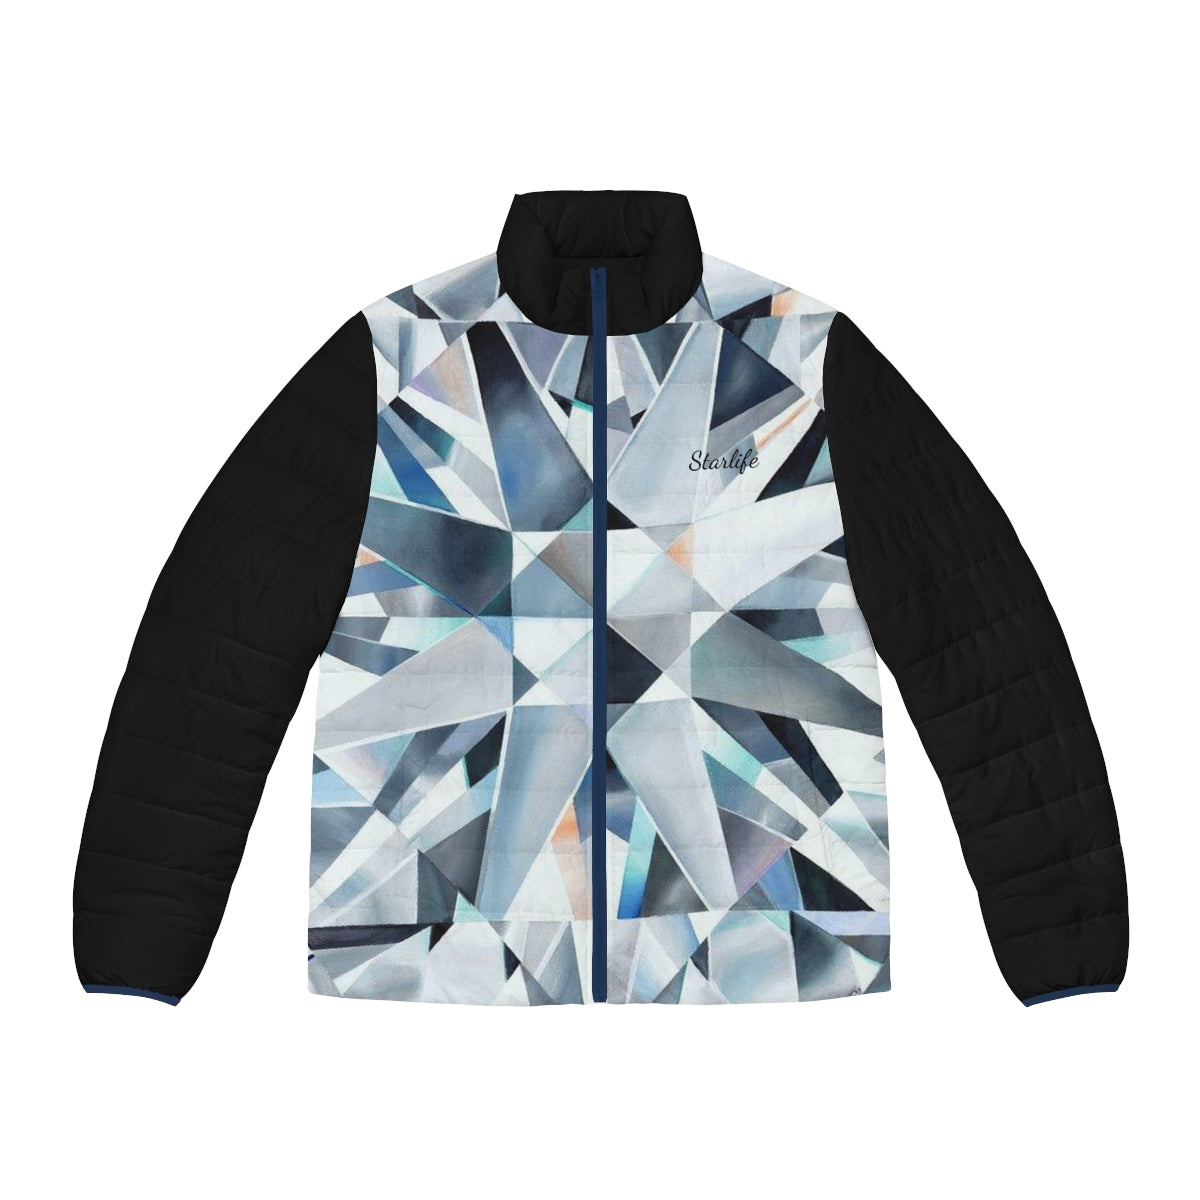 Starlife Diamond Life Puffer Jacket